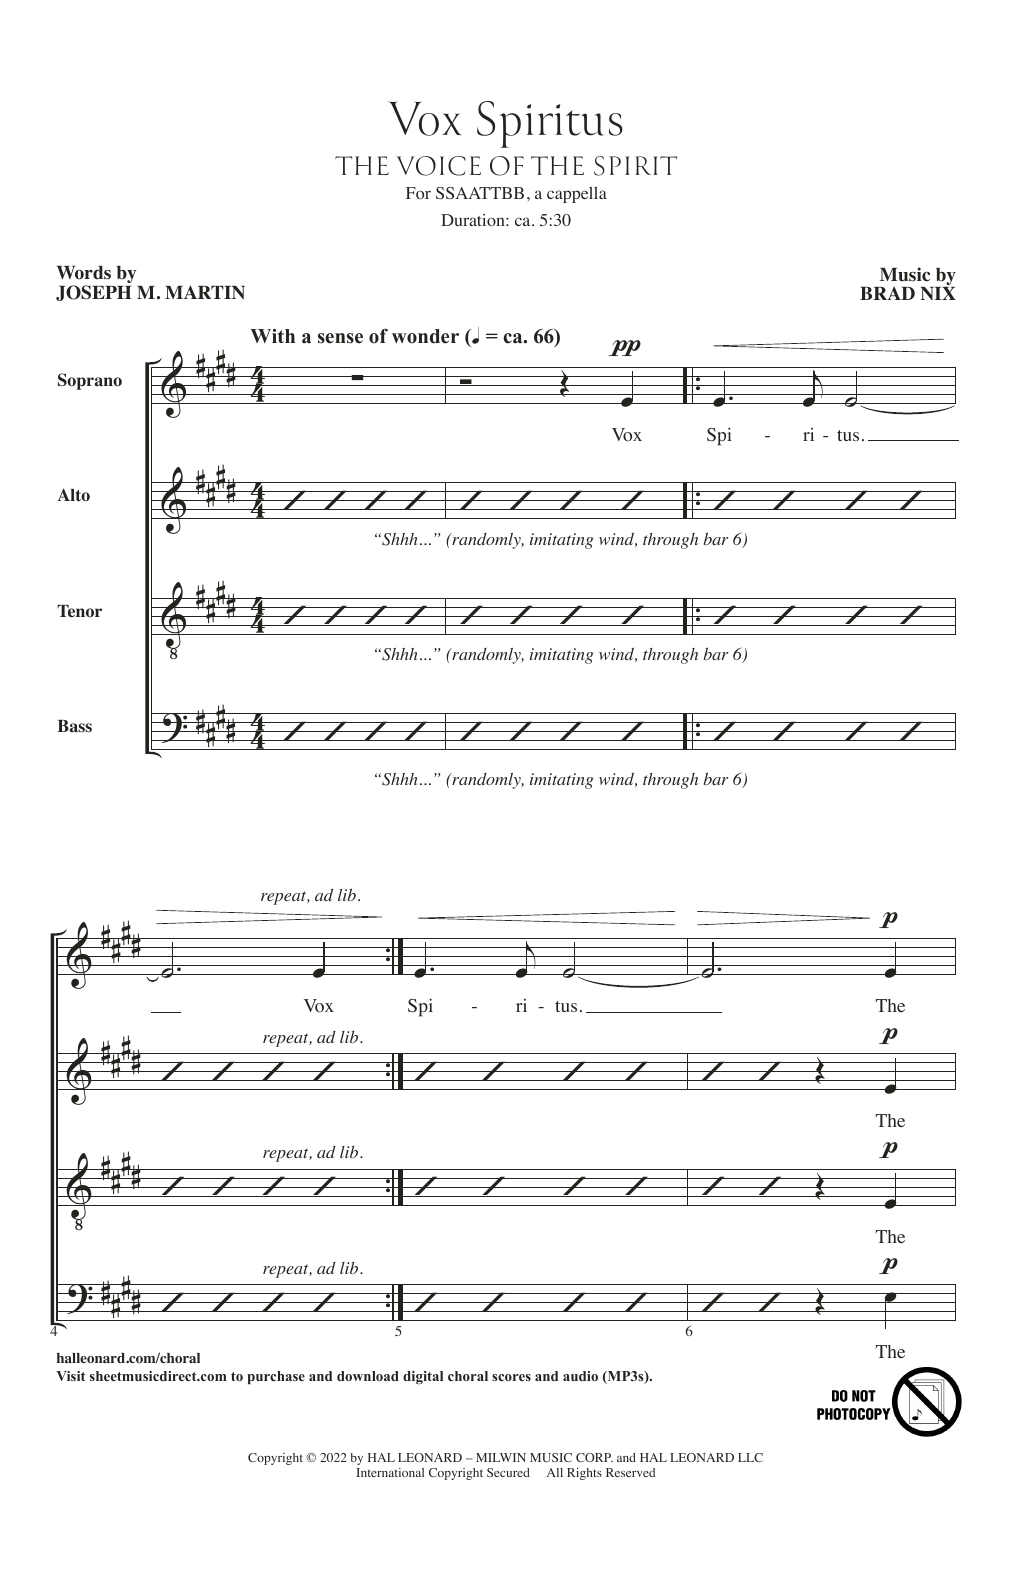 Joseph M. Martin and Brad Nix Vox Spiritus (The Voice Of The Spirit) Sheet Music Notes & Chords for SATB Choir - Download or Print PDF